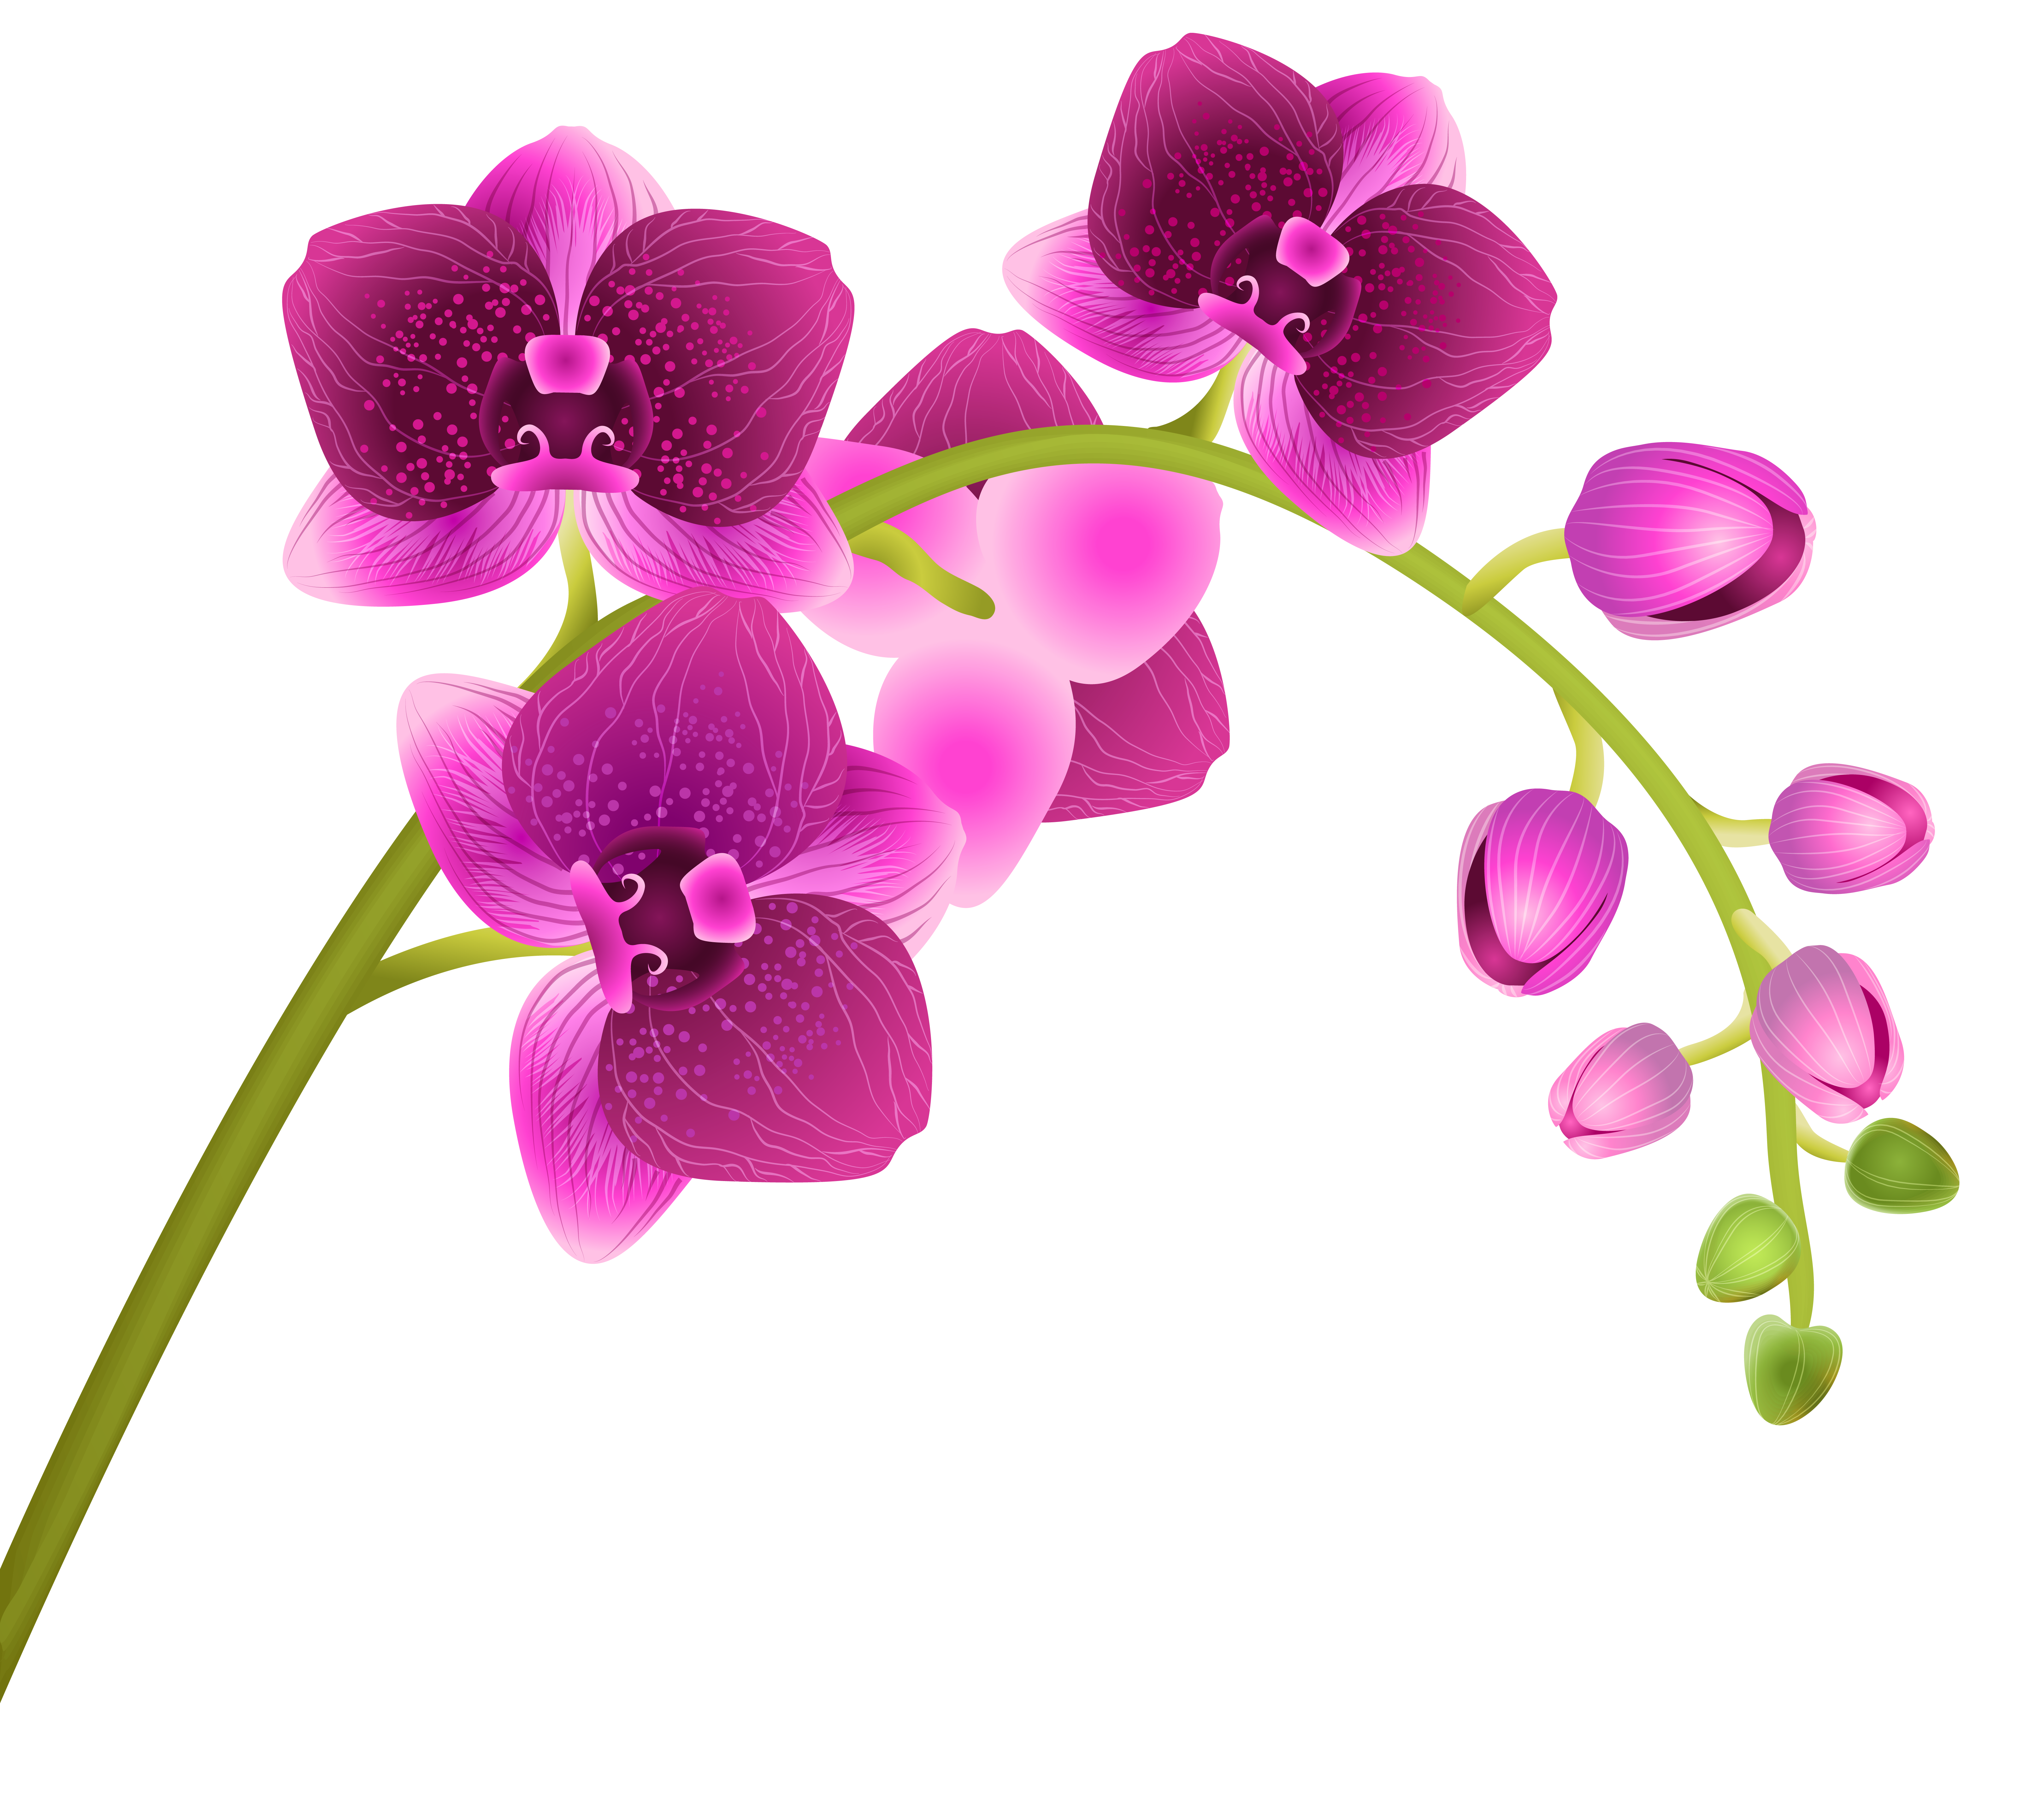 Orchid Flower Transparent PNG Clip Art Image